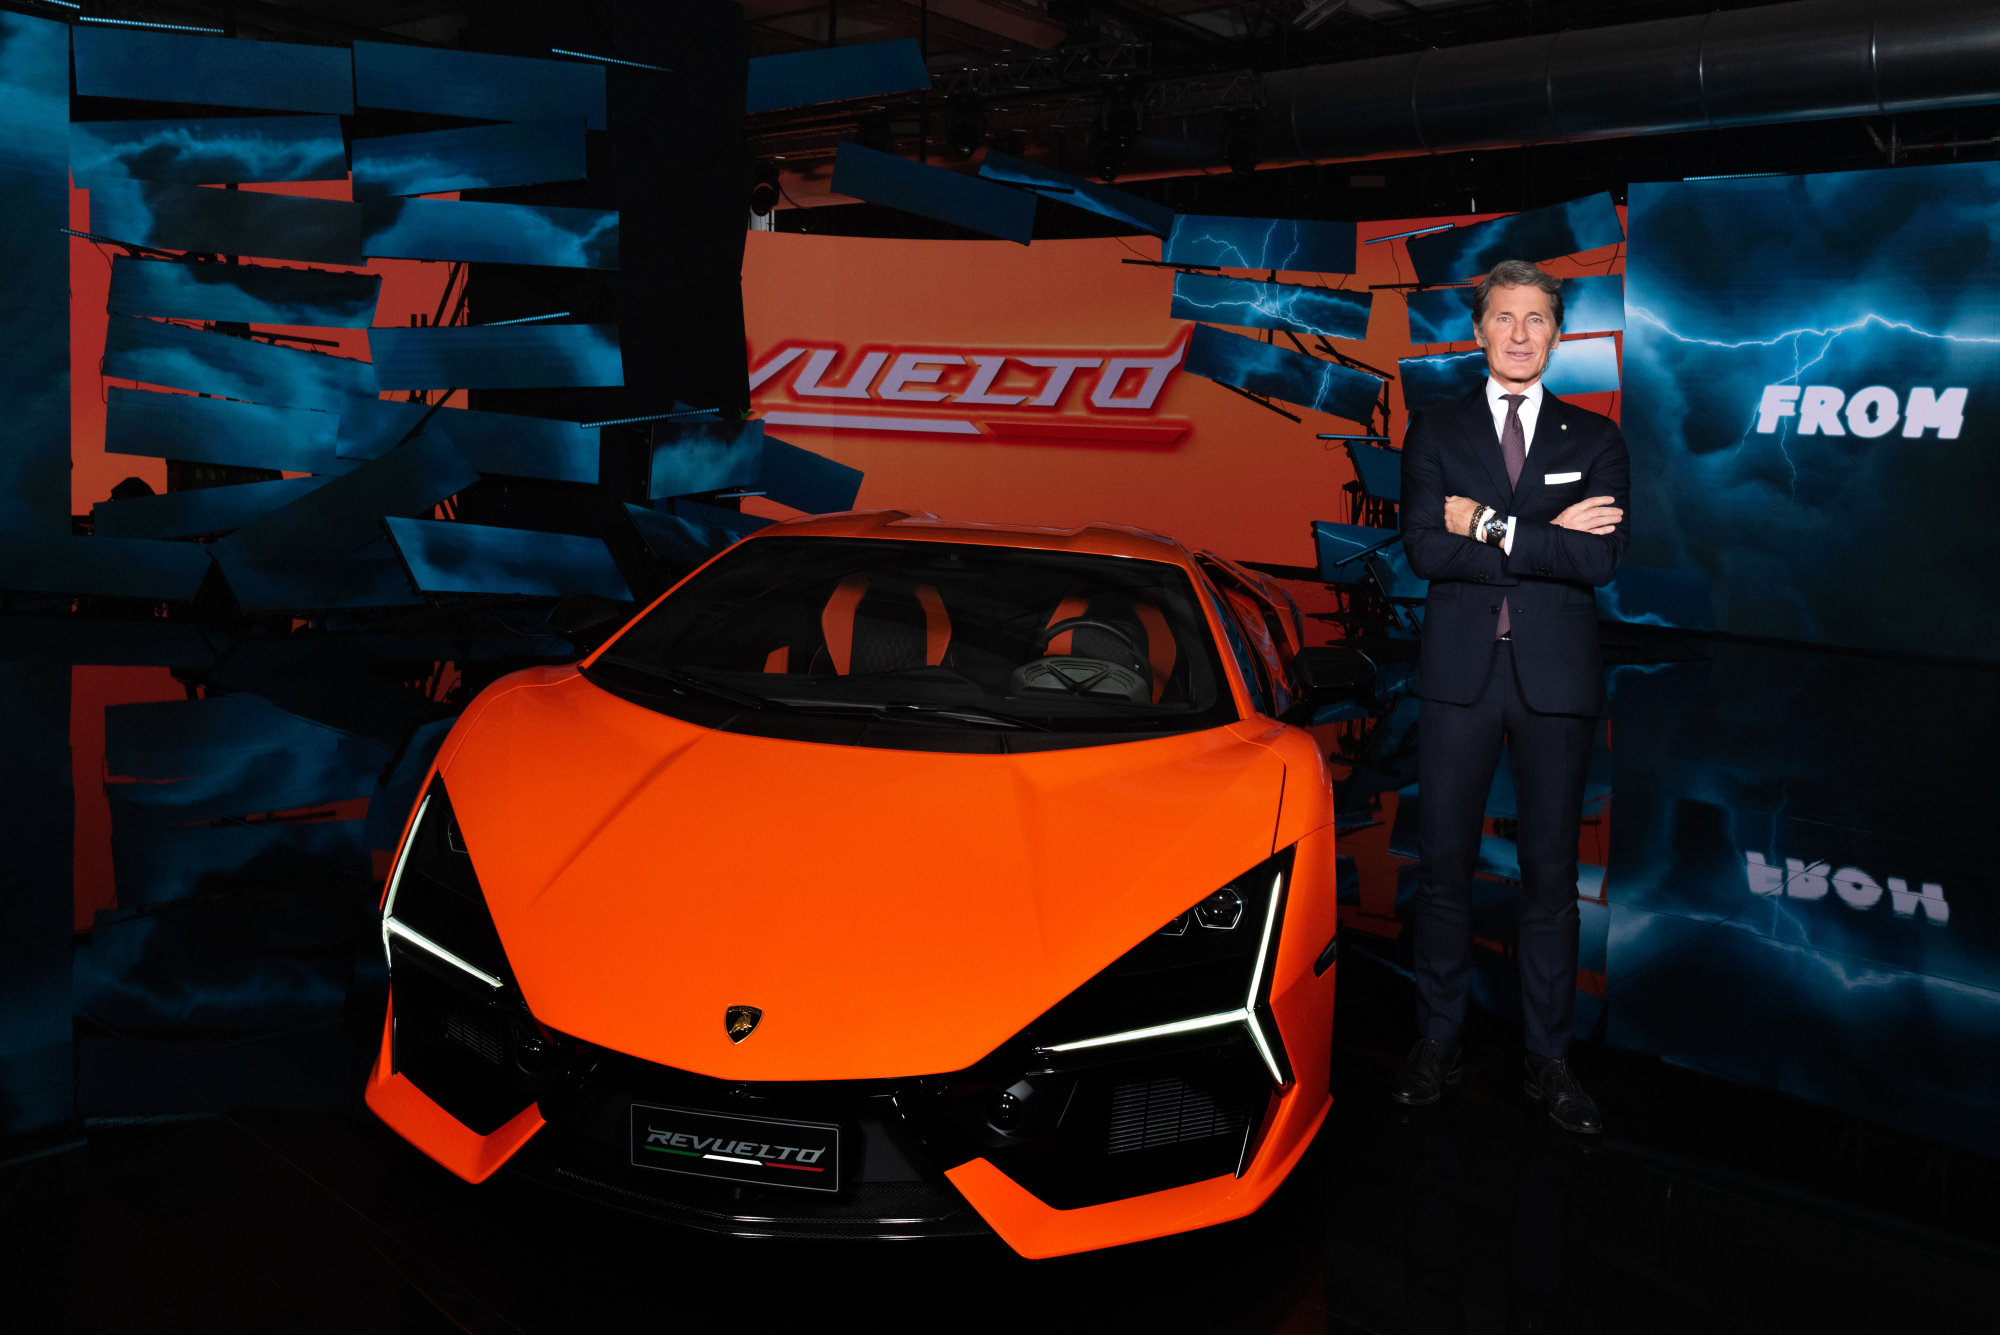 El Lamborghini Revuelto hace su debut mundial en Sant’Agata Bolognese. 0 (0)